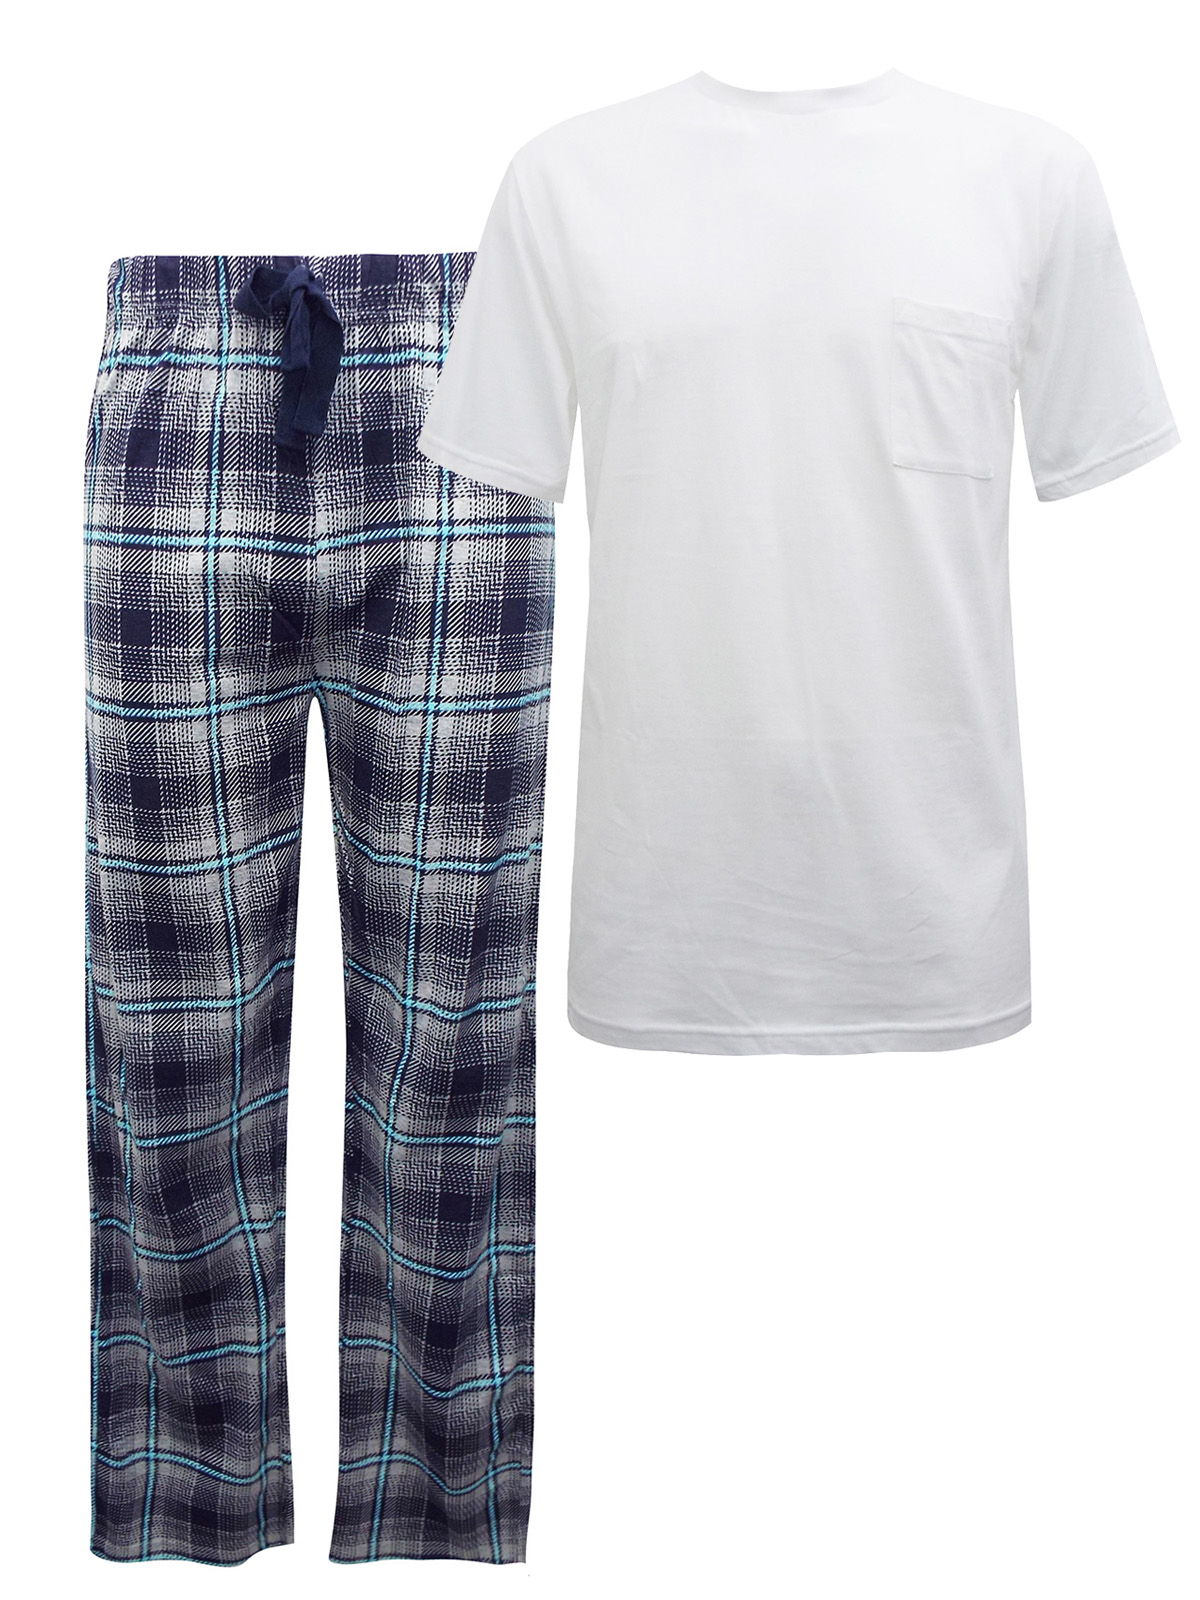 WHITE Mens Cotton Checked Short Sleeve Pyjama Set - Size S to XL